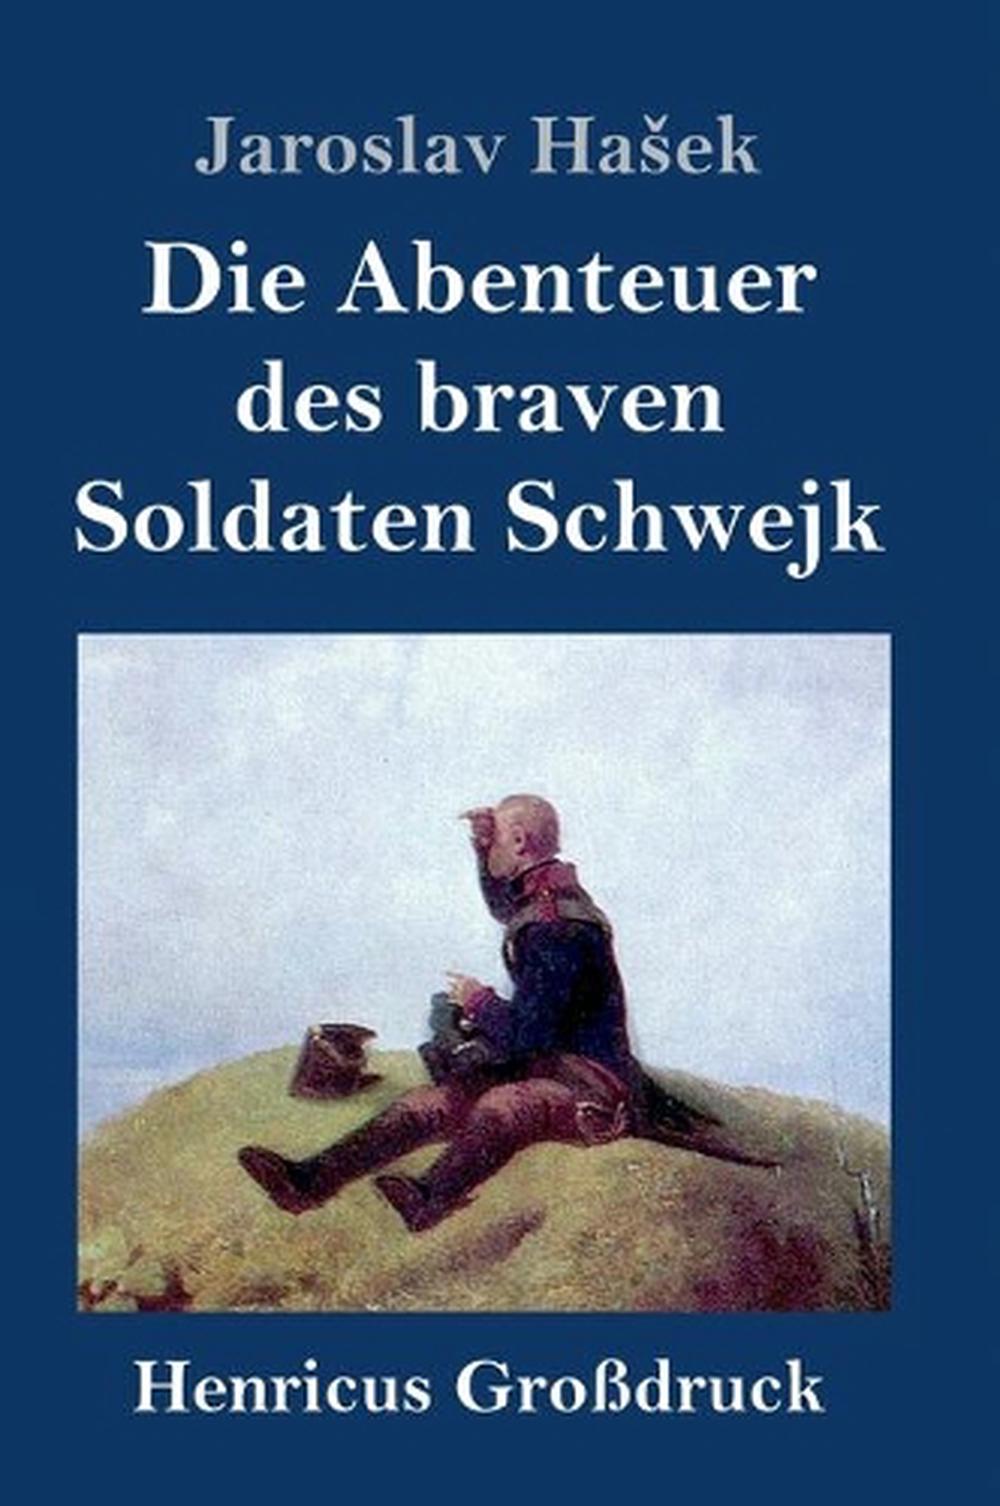 Die Abenteuer Des Braven Soldaten Schwejk (grossdruck) by Jaroslav - Die Abenteuer Des Braven Soldaten Schwejk